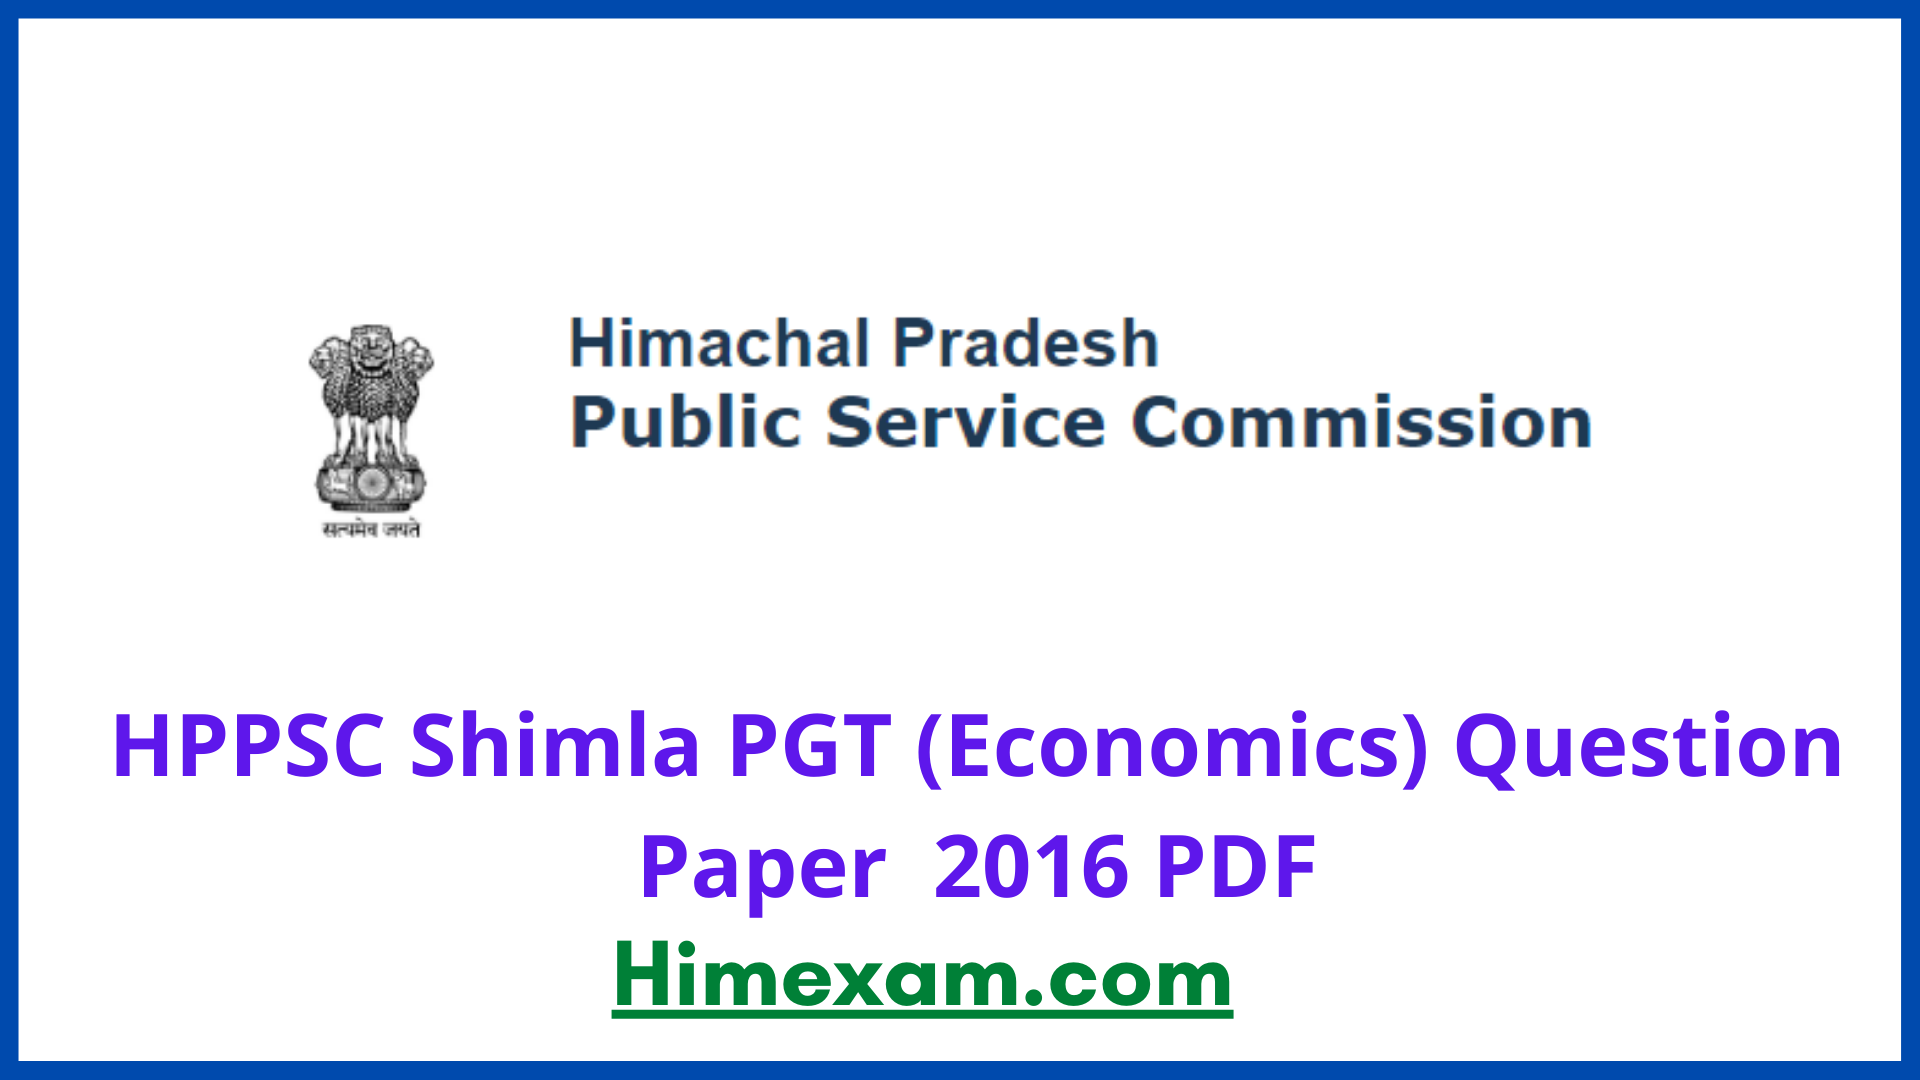 HPPSC Shimla PGT (Economics) Question Paper  2016 PDF